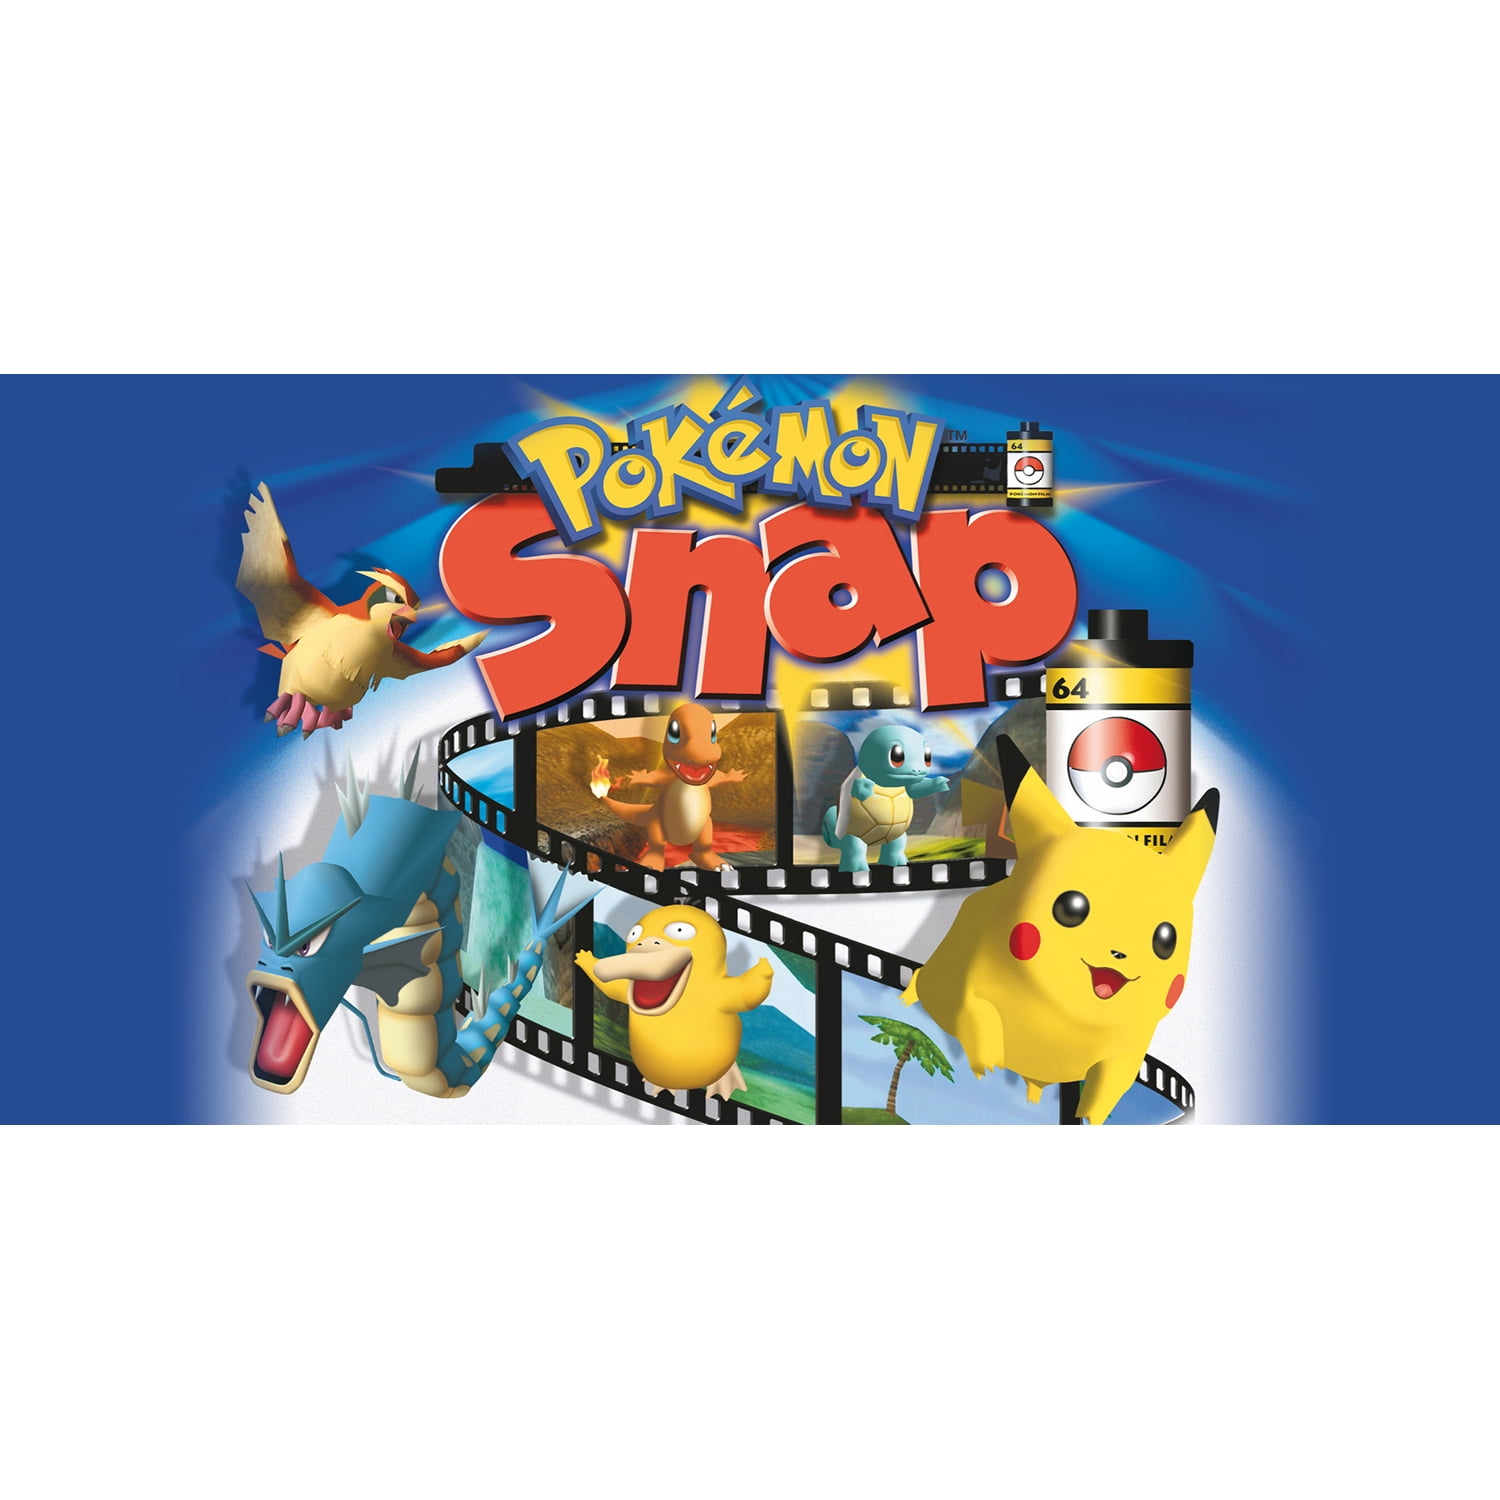 N64 Pokemon Snap Nintendo Wiiu Digital Download 0004549666189 Walmart Com Walmart Com - roblox sword swing animation download